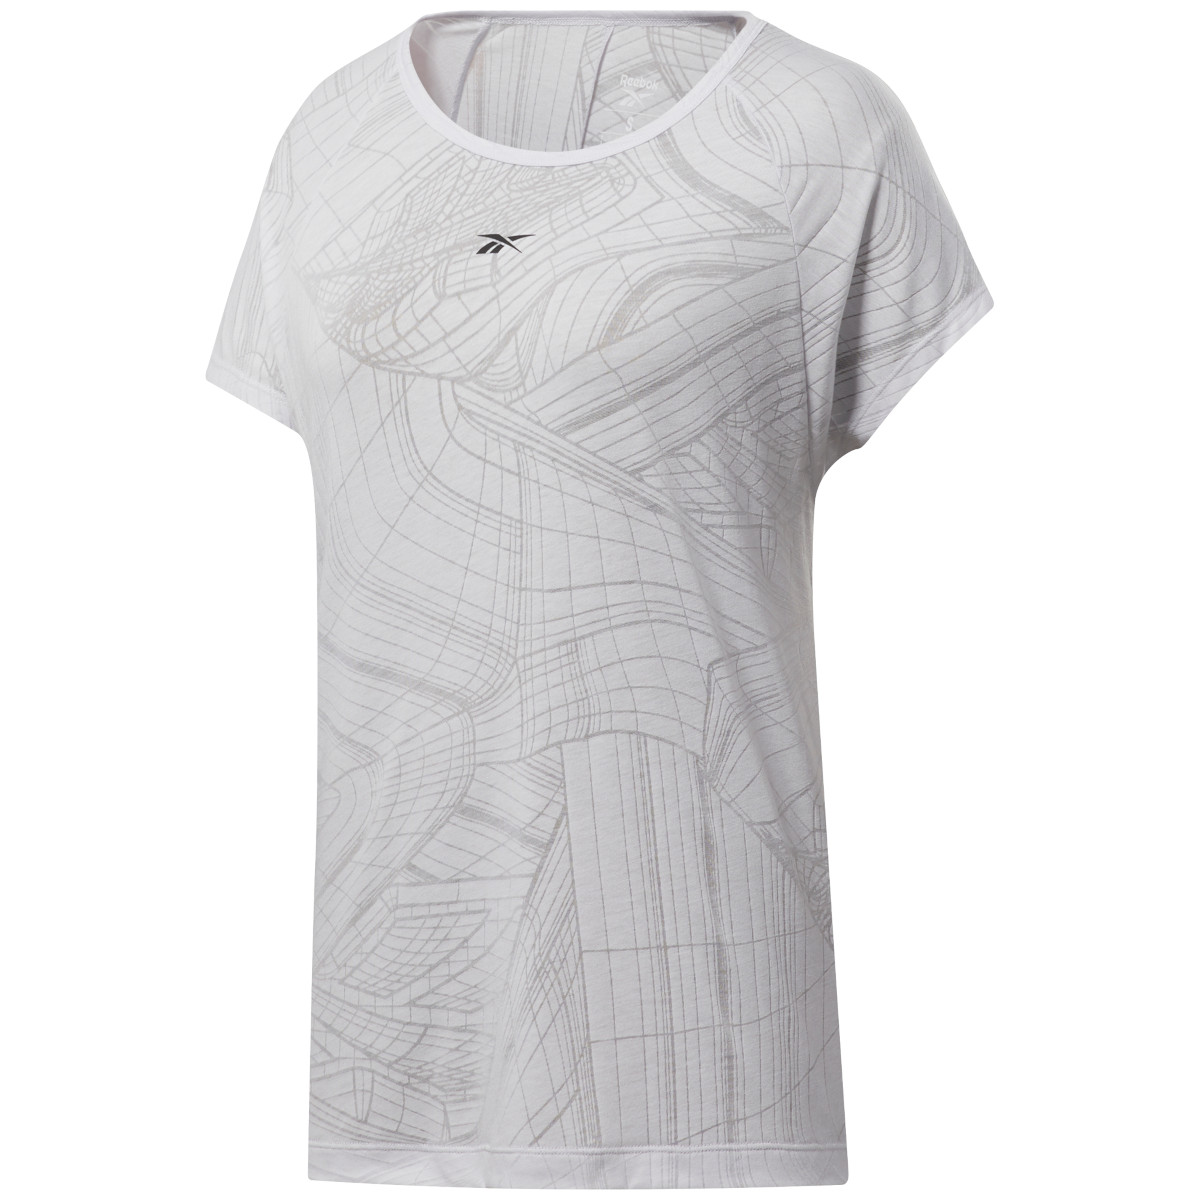 Reebok Women Burnout T-Shirt - porcelain FT0805